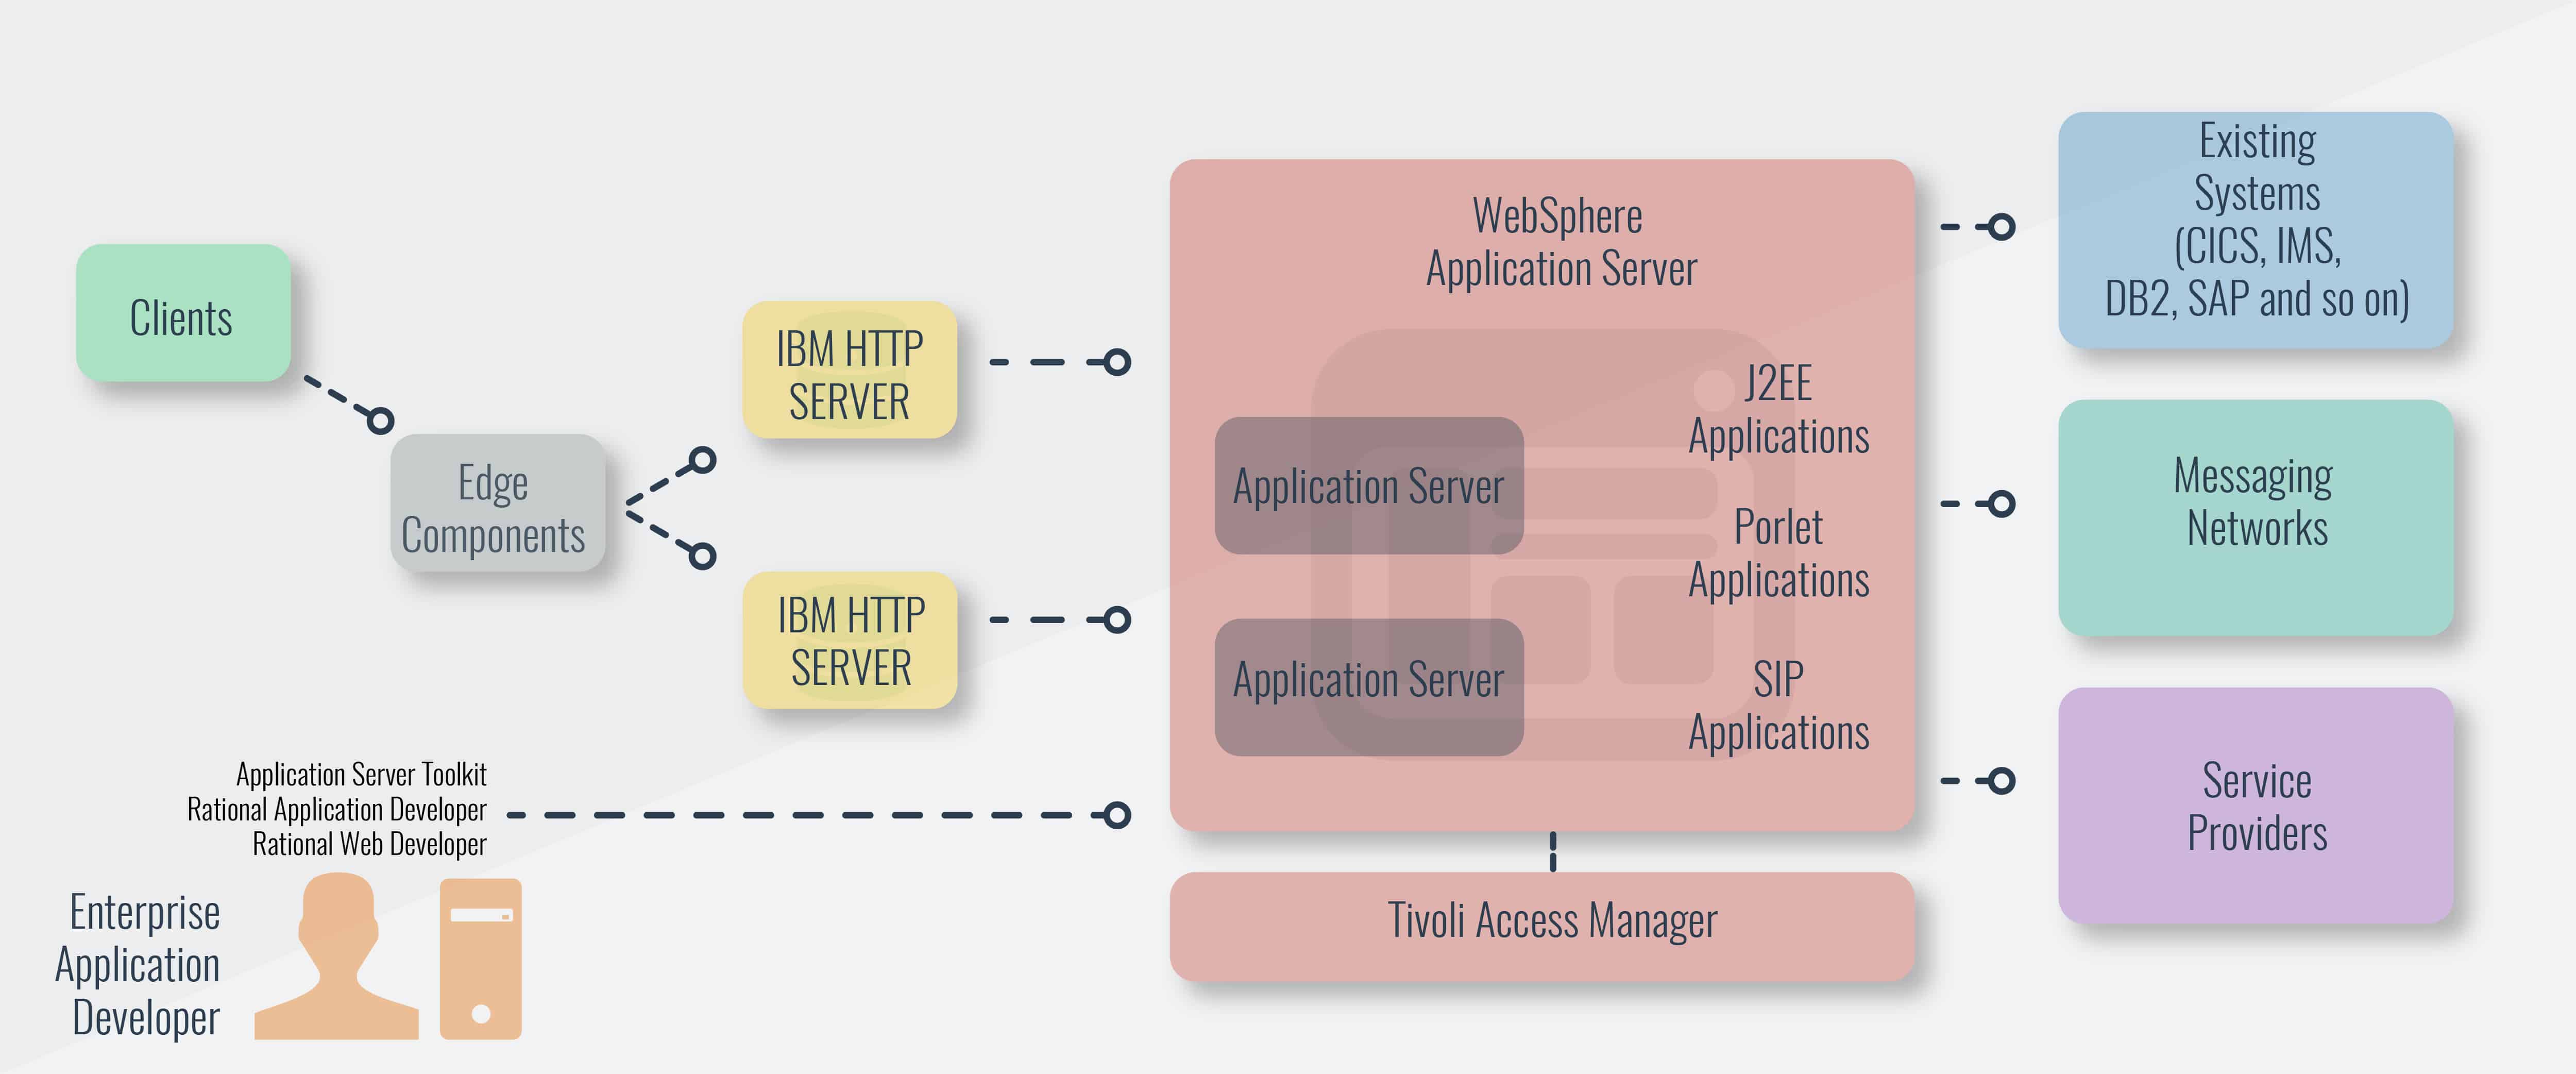 WebSphere Application Serverガイドおよび管理ツール